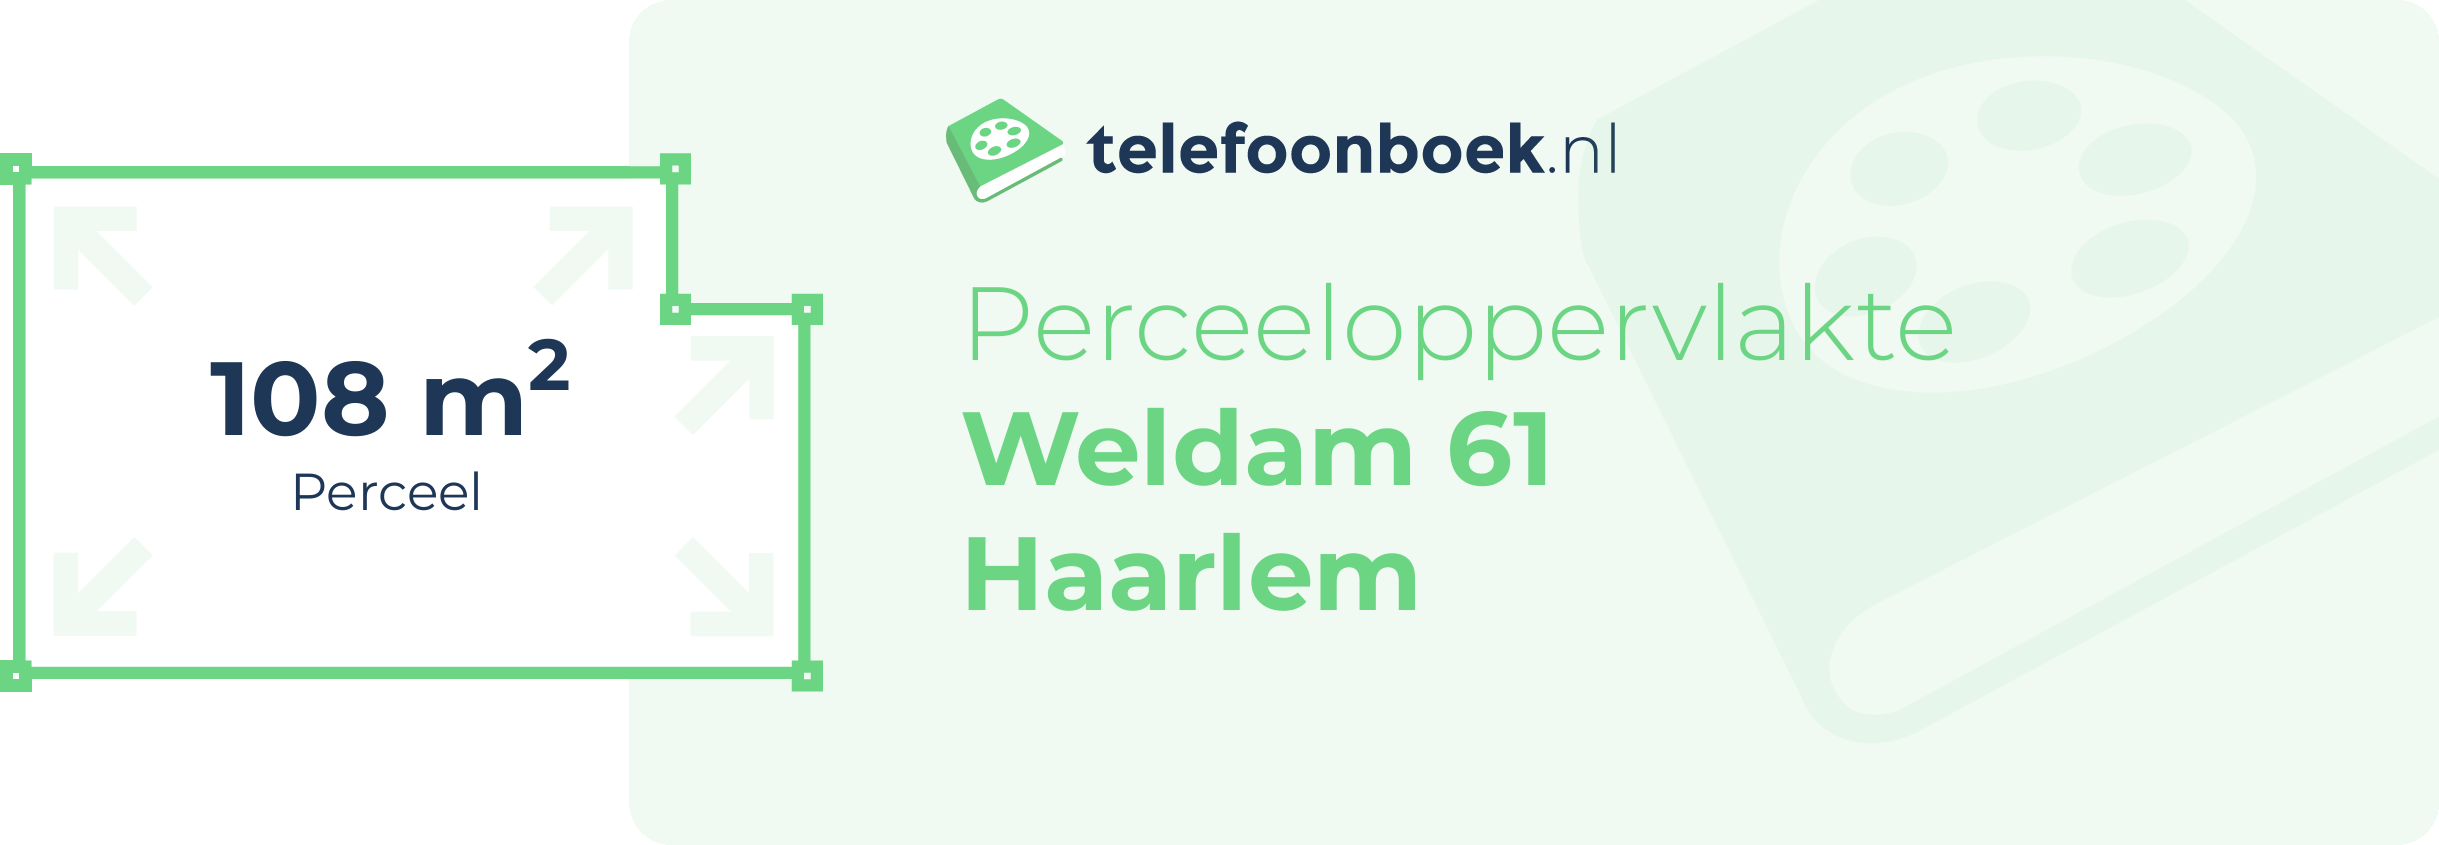 Perceeloppervlakte Weldam 61 Haarlem